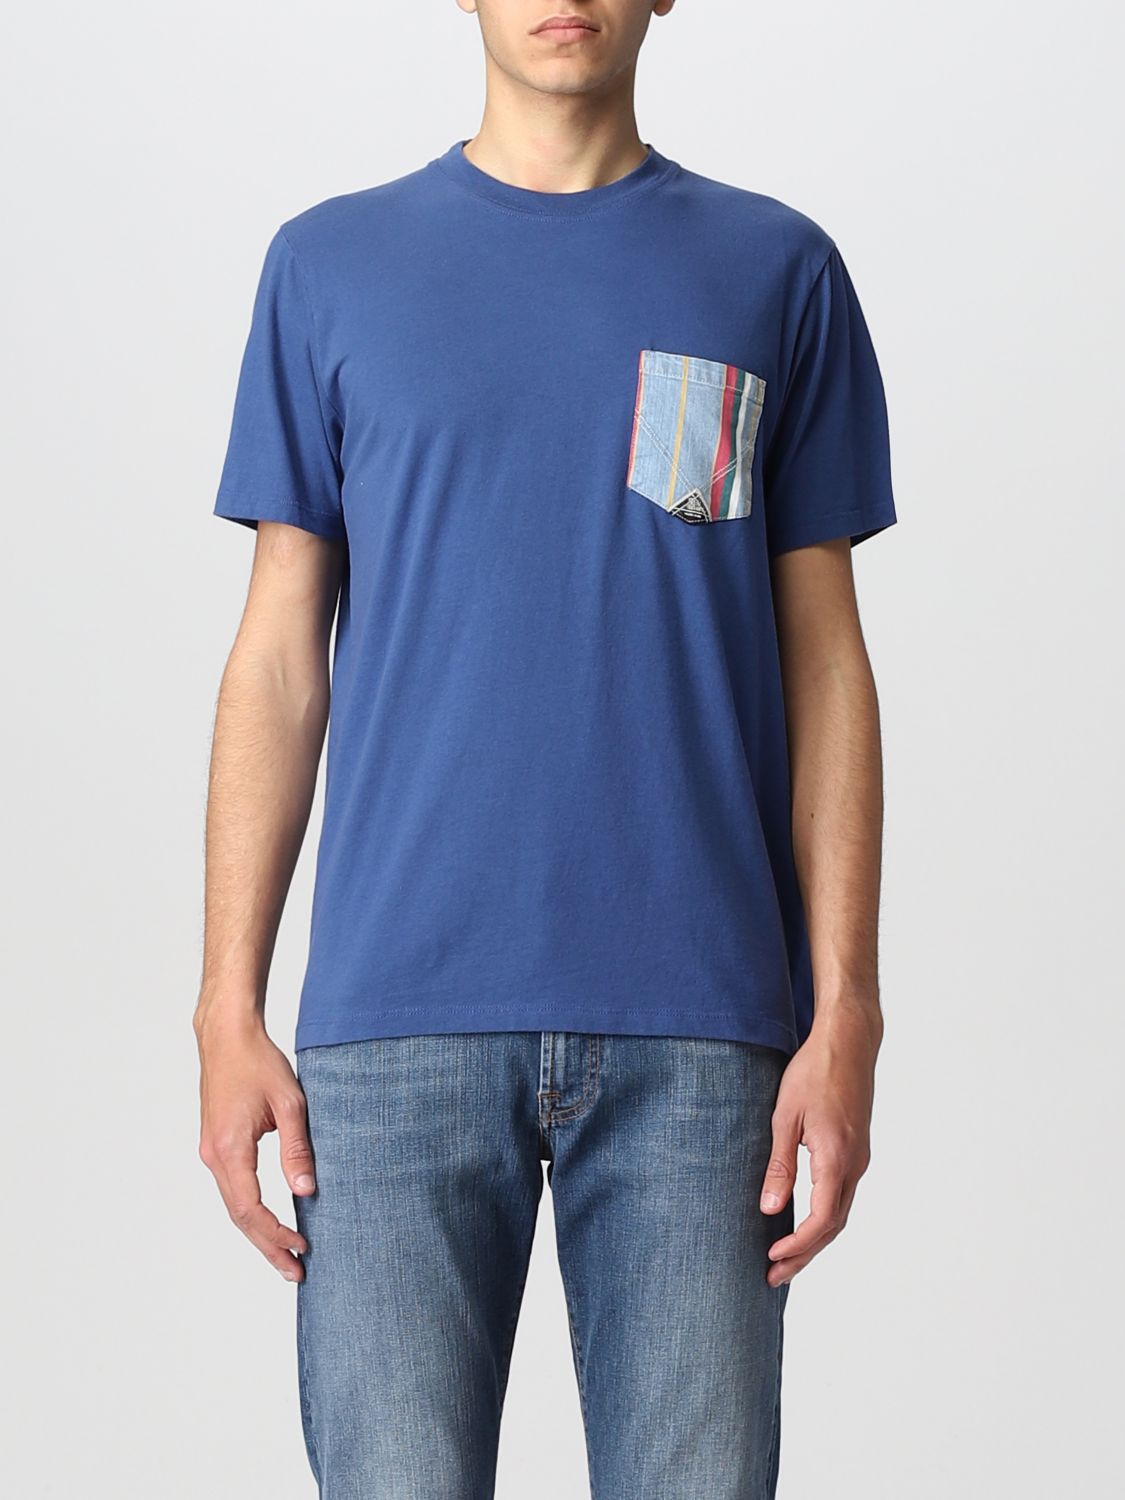 T-Shirt Roy Rogers: T-shirt herren Roy Rogers hellblau 1